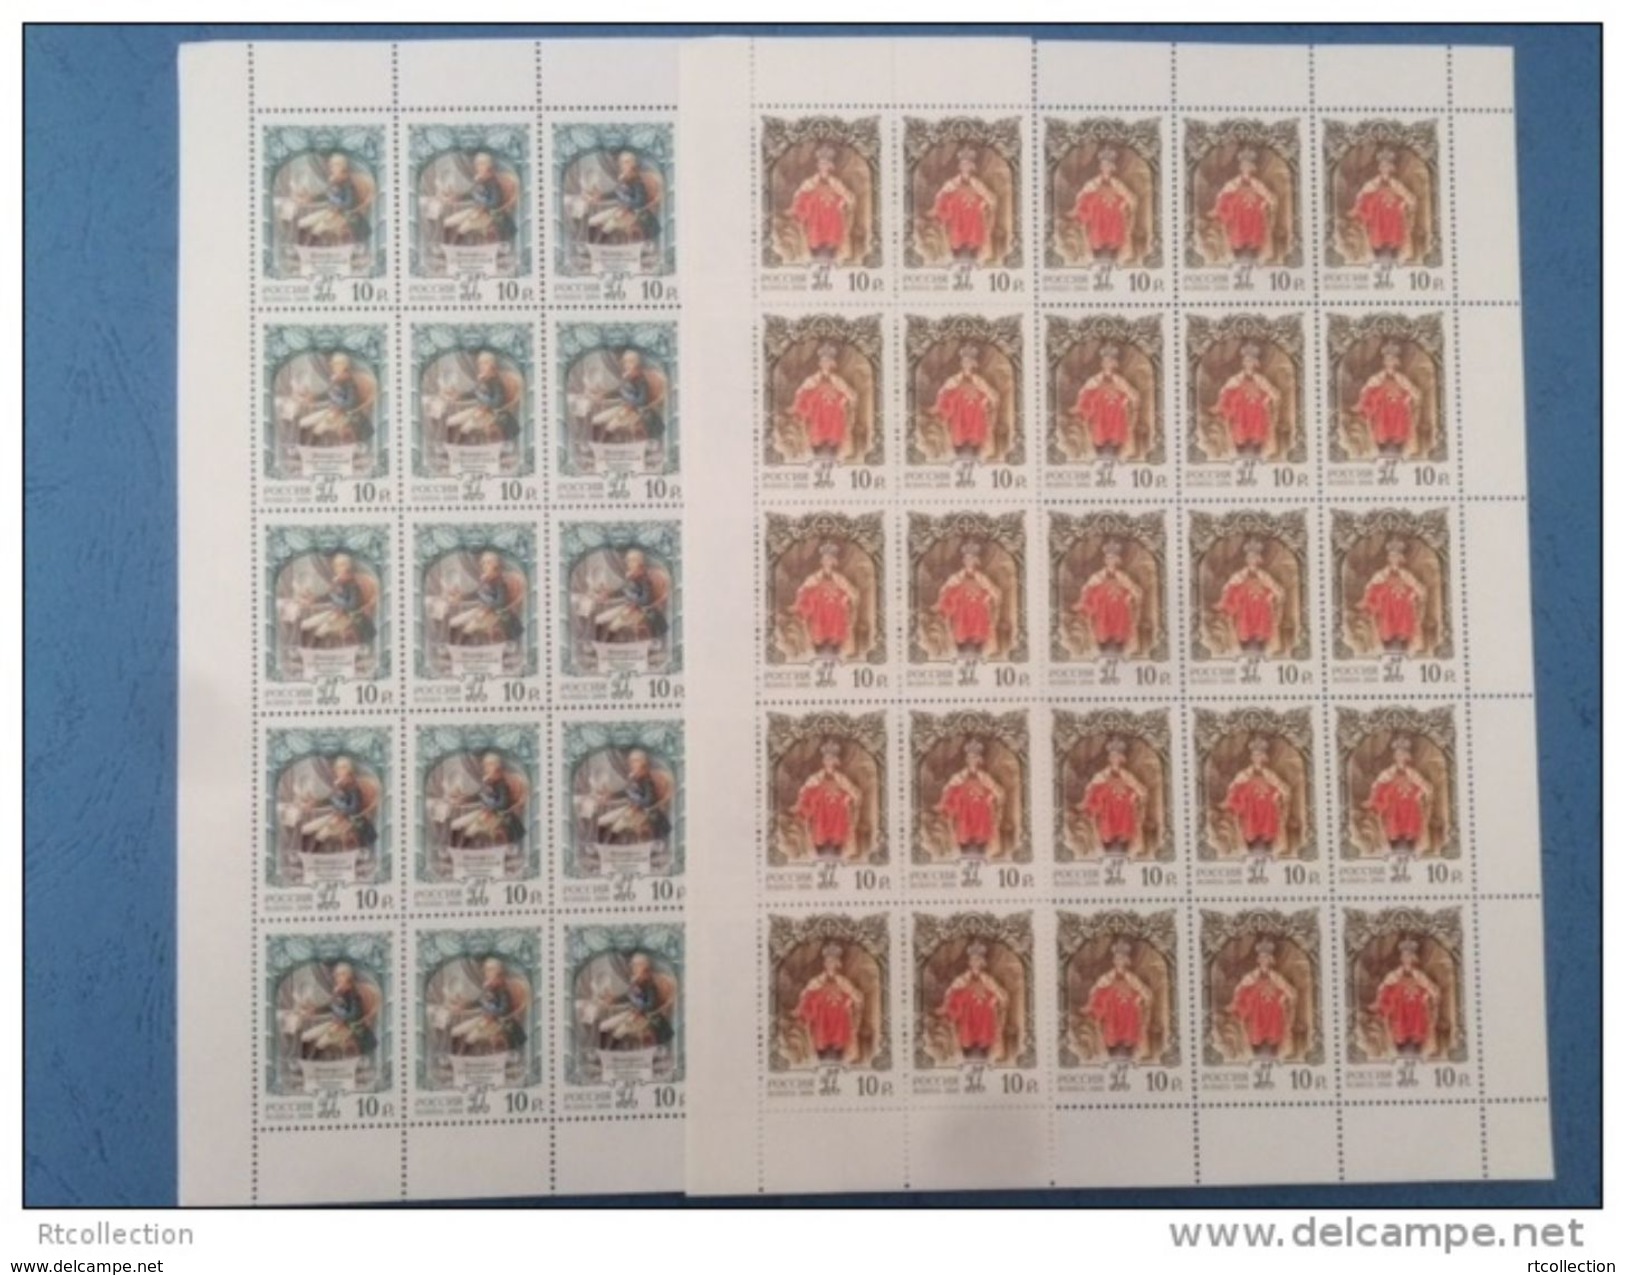 Russia 2004 Sheet 250Y Emperor Paul I Art Portrait Royals Royalty People Celebrations Stamps Mi 1206-07 SC 6862-63 - Feuilles Complètes